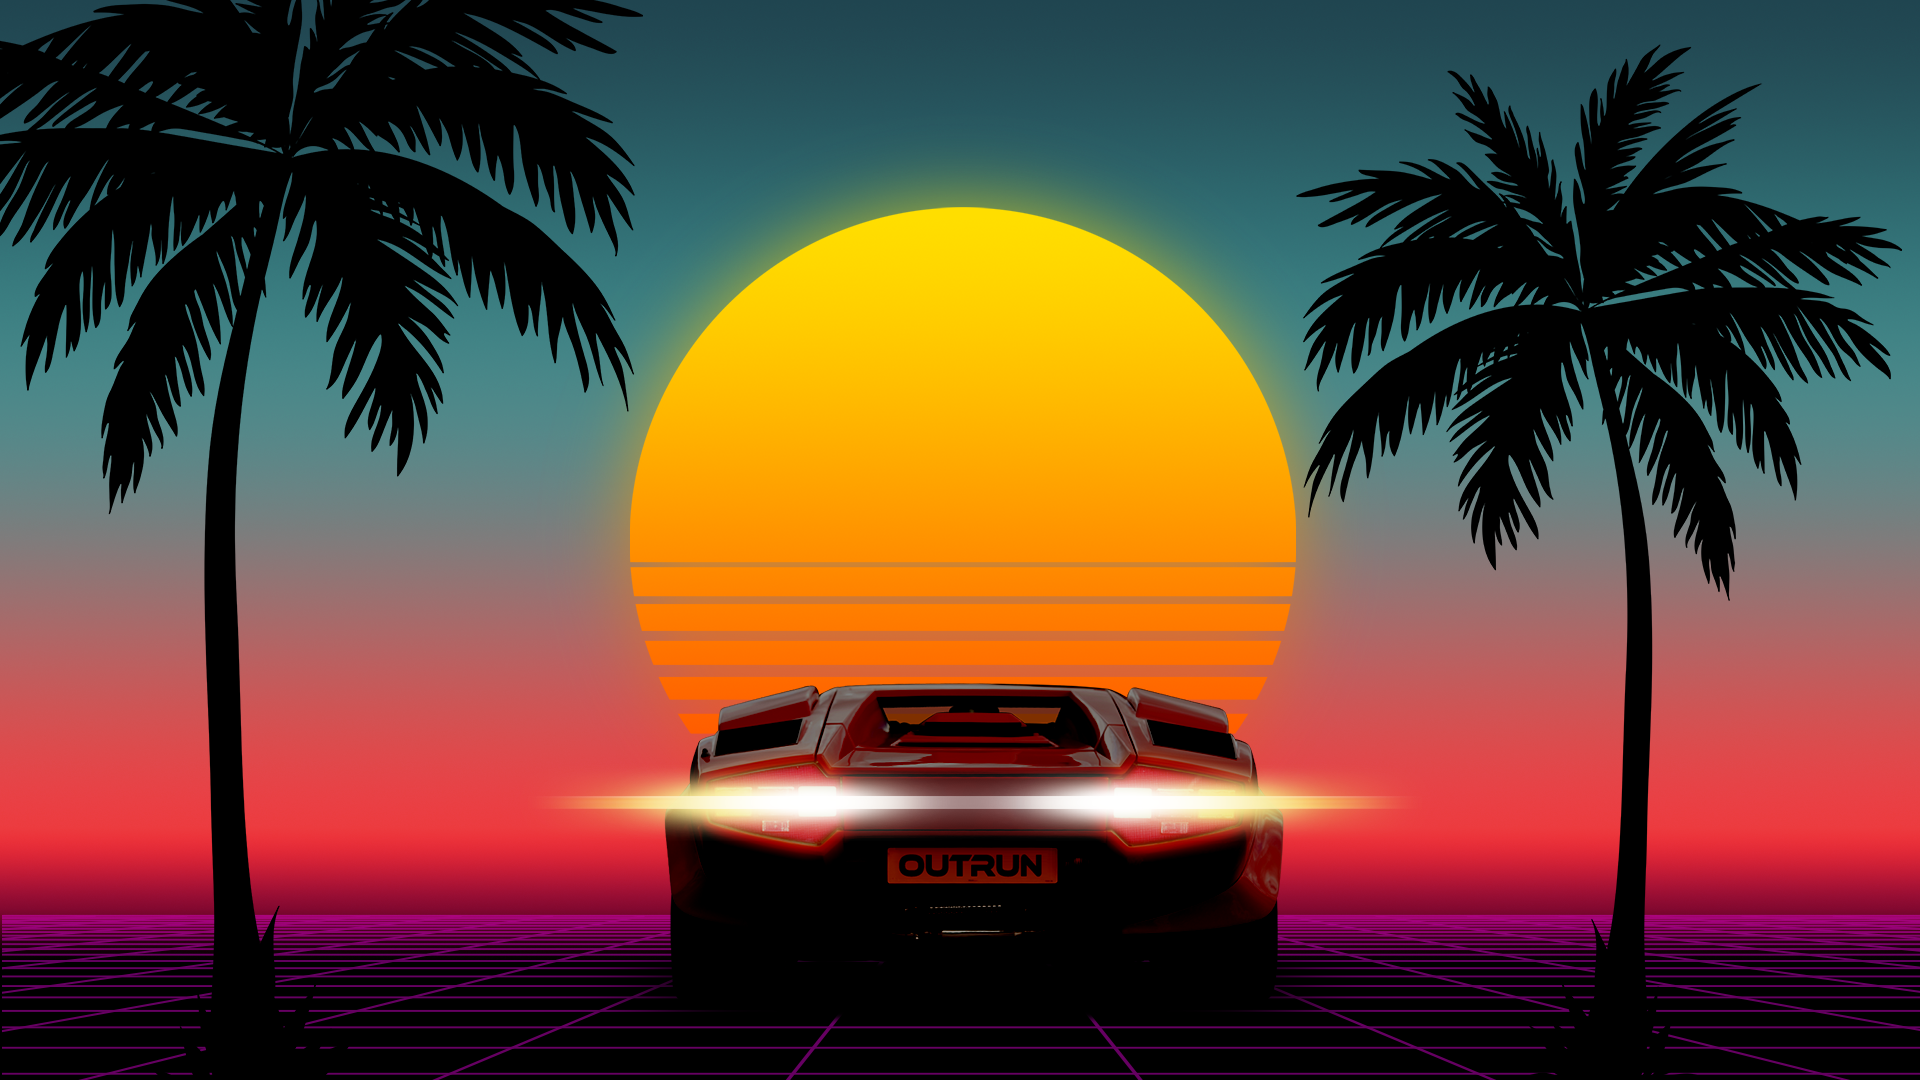 General 1920x1080 1980s 80s sunset car Lamborghini palm trees 8-bit neon OutRun